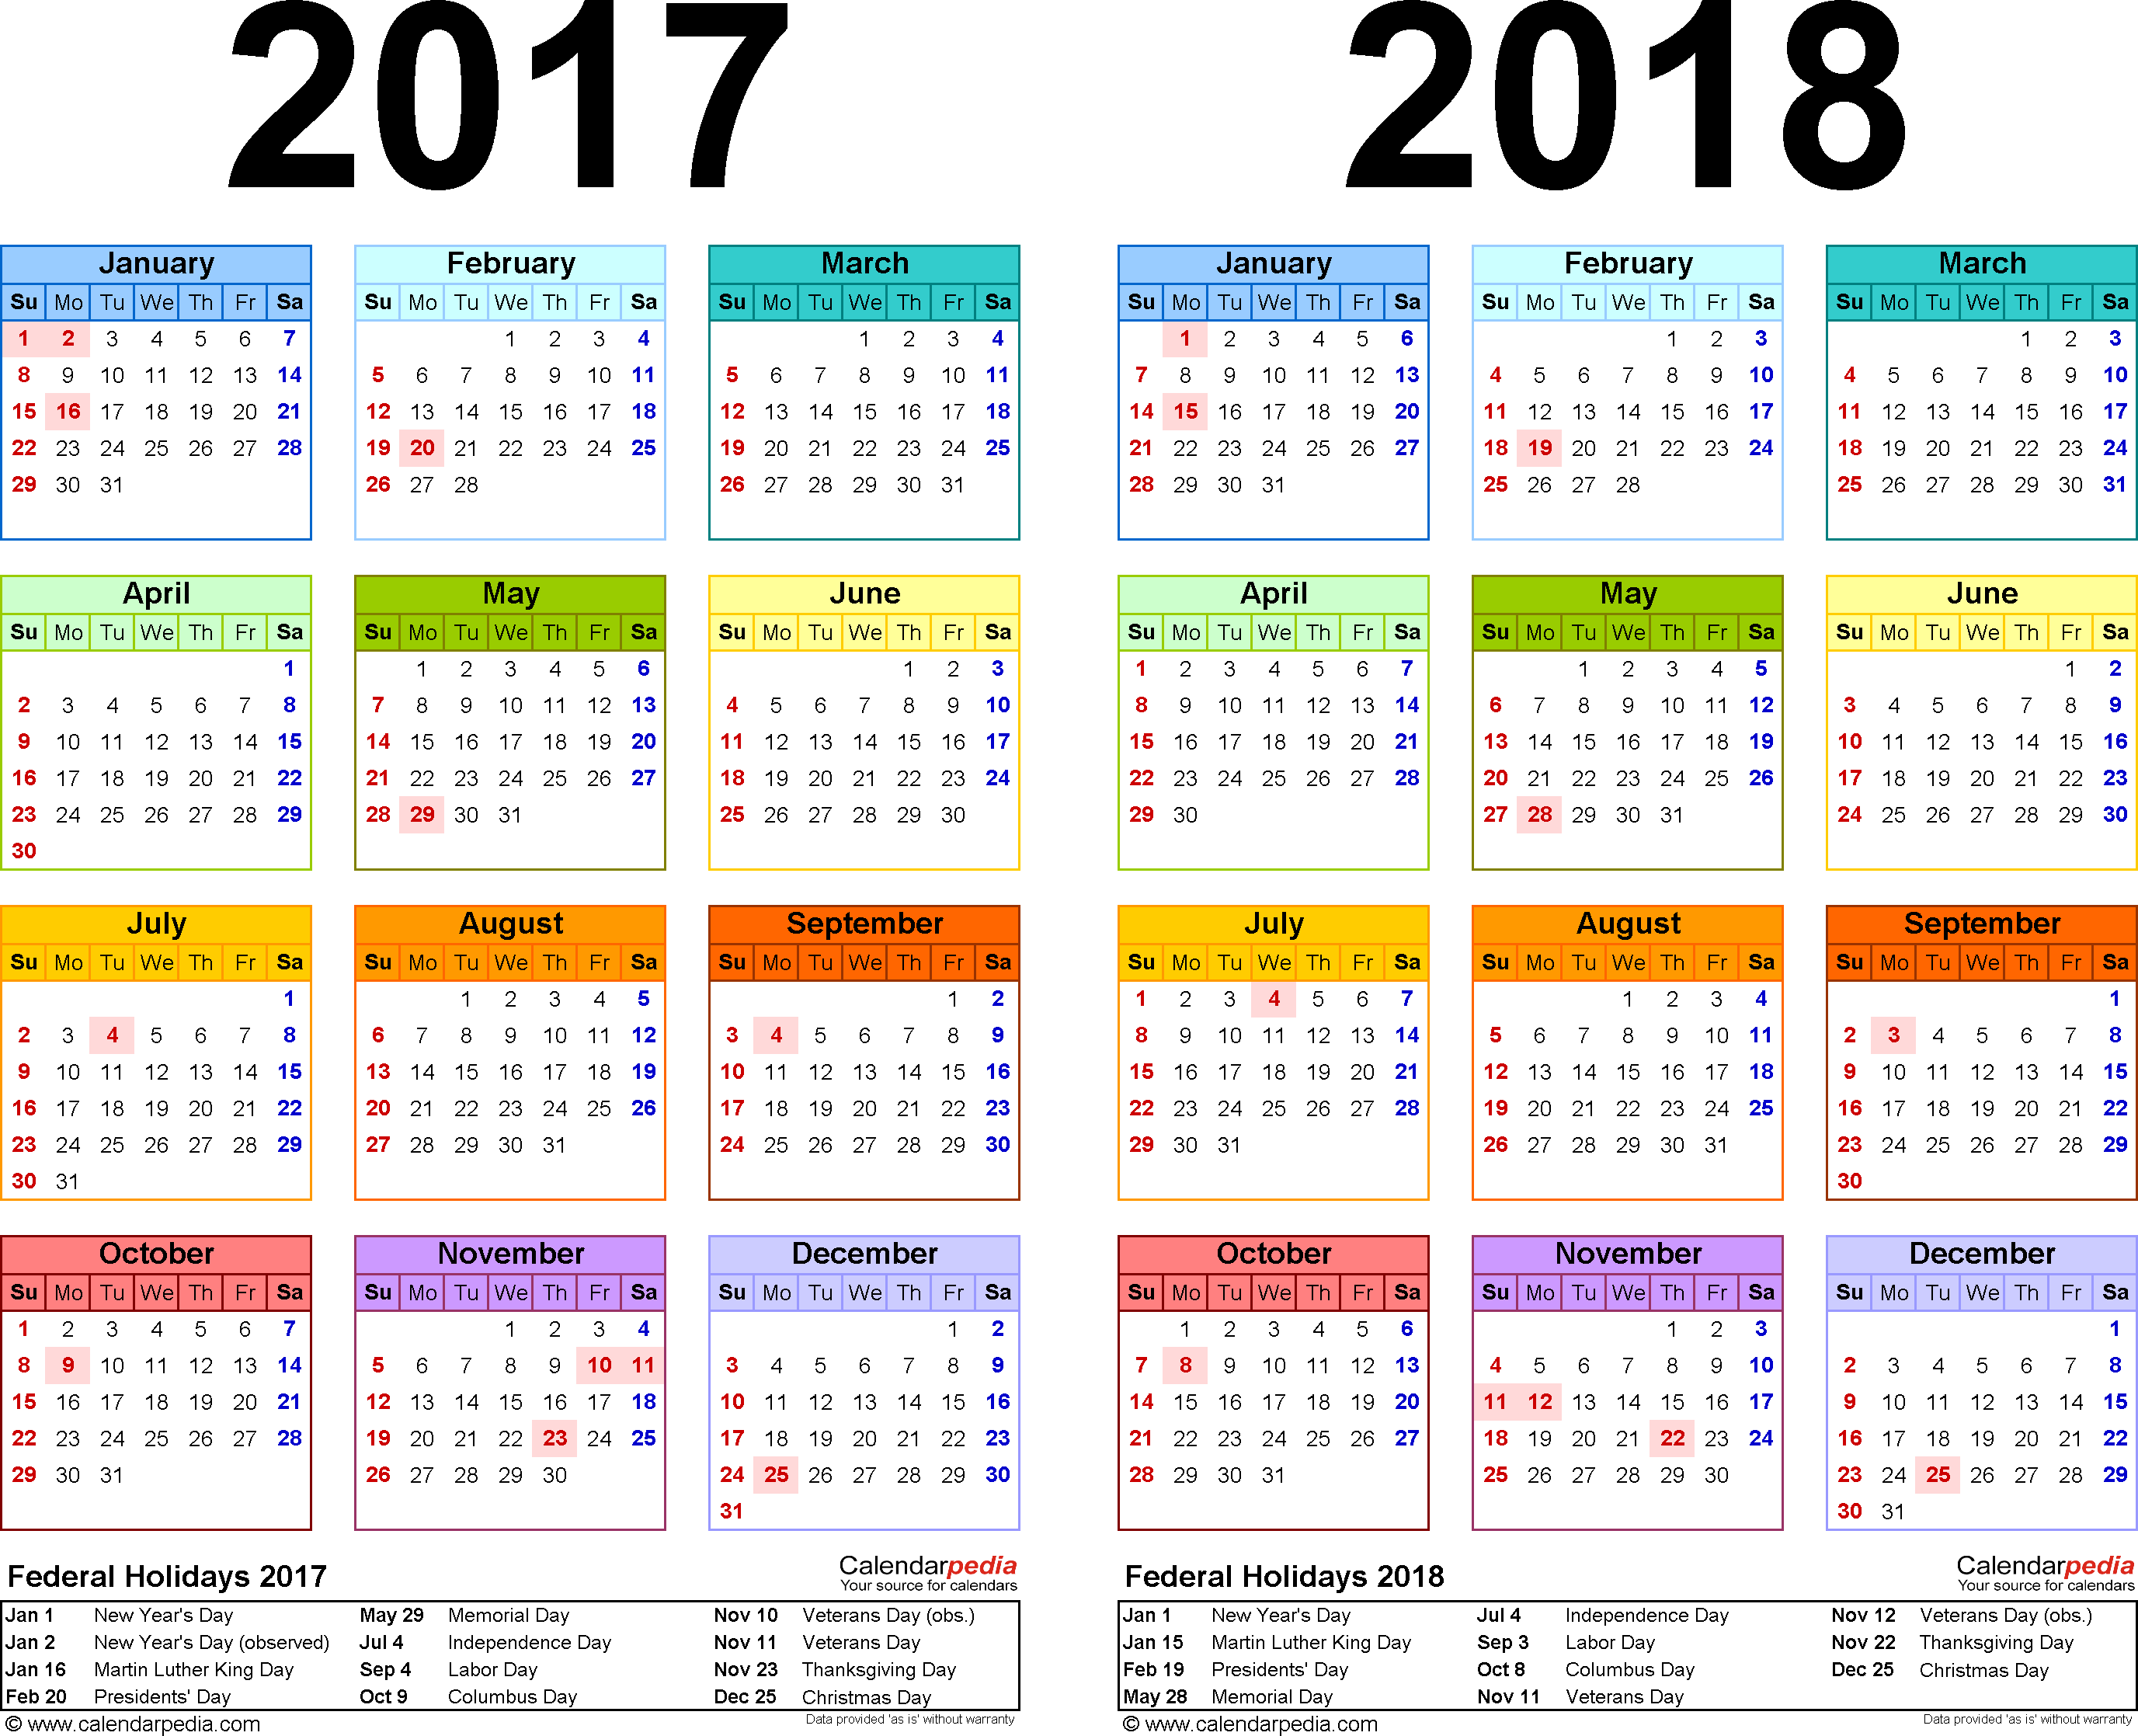 2017 2018 Calendar free printable two year PDF calendars